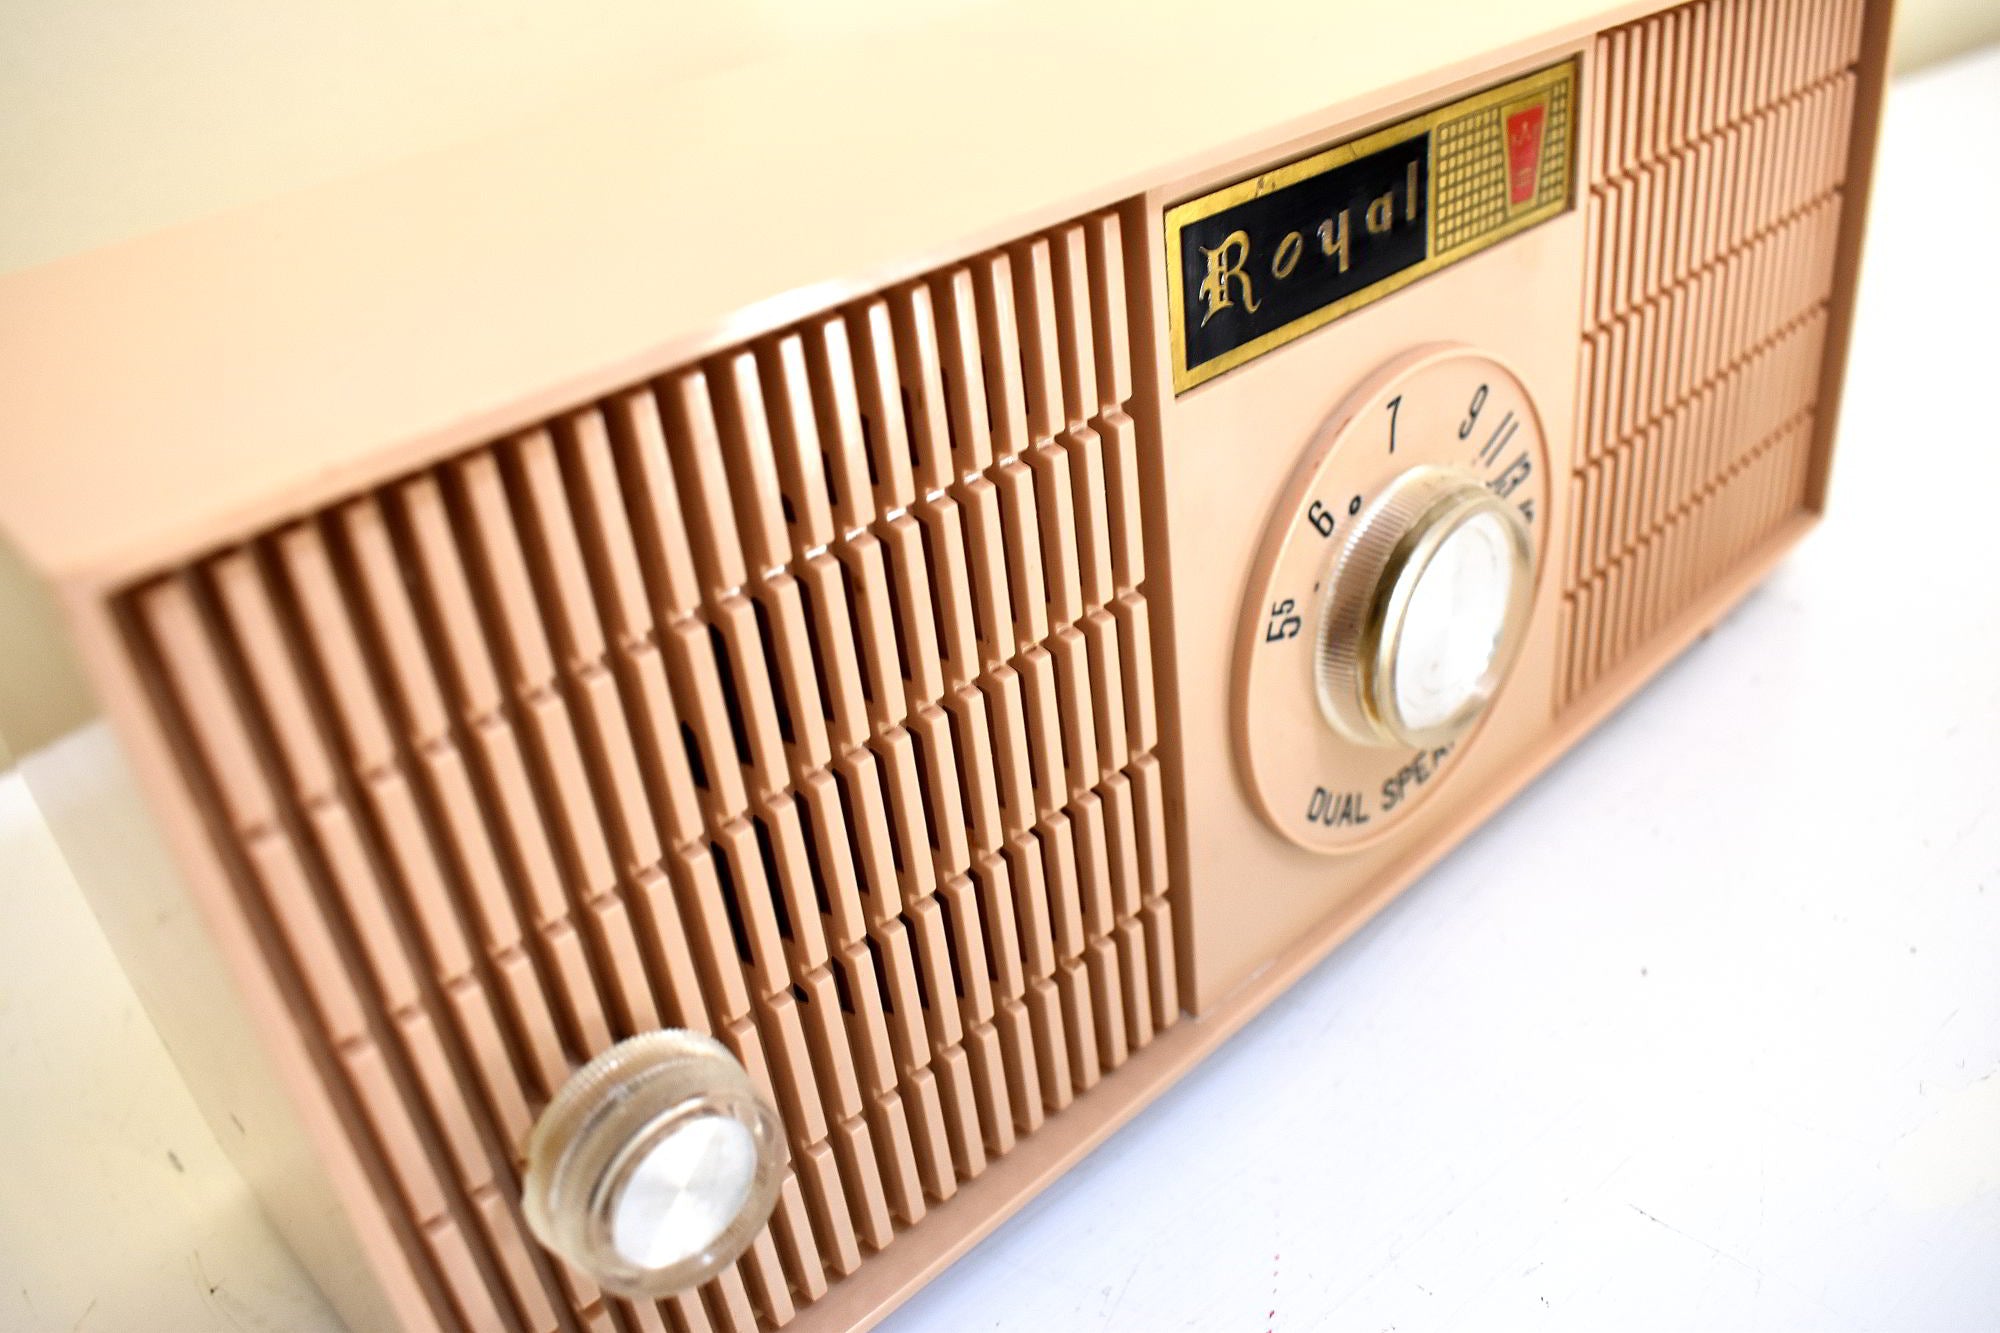 Enceinte bluetooth radio vintage beige